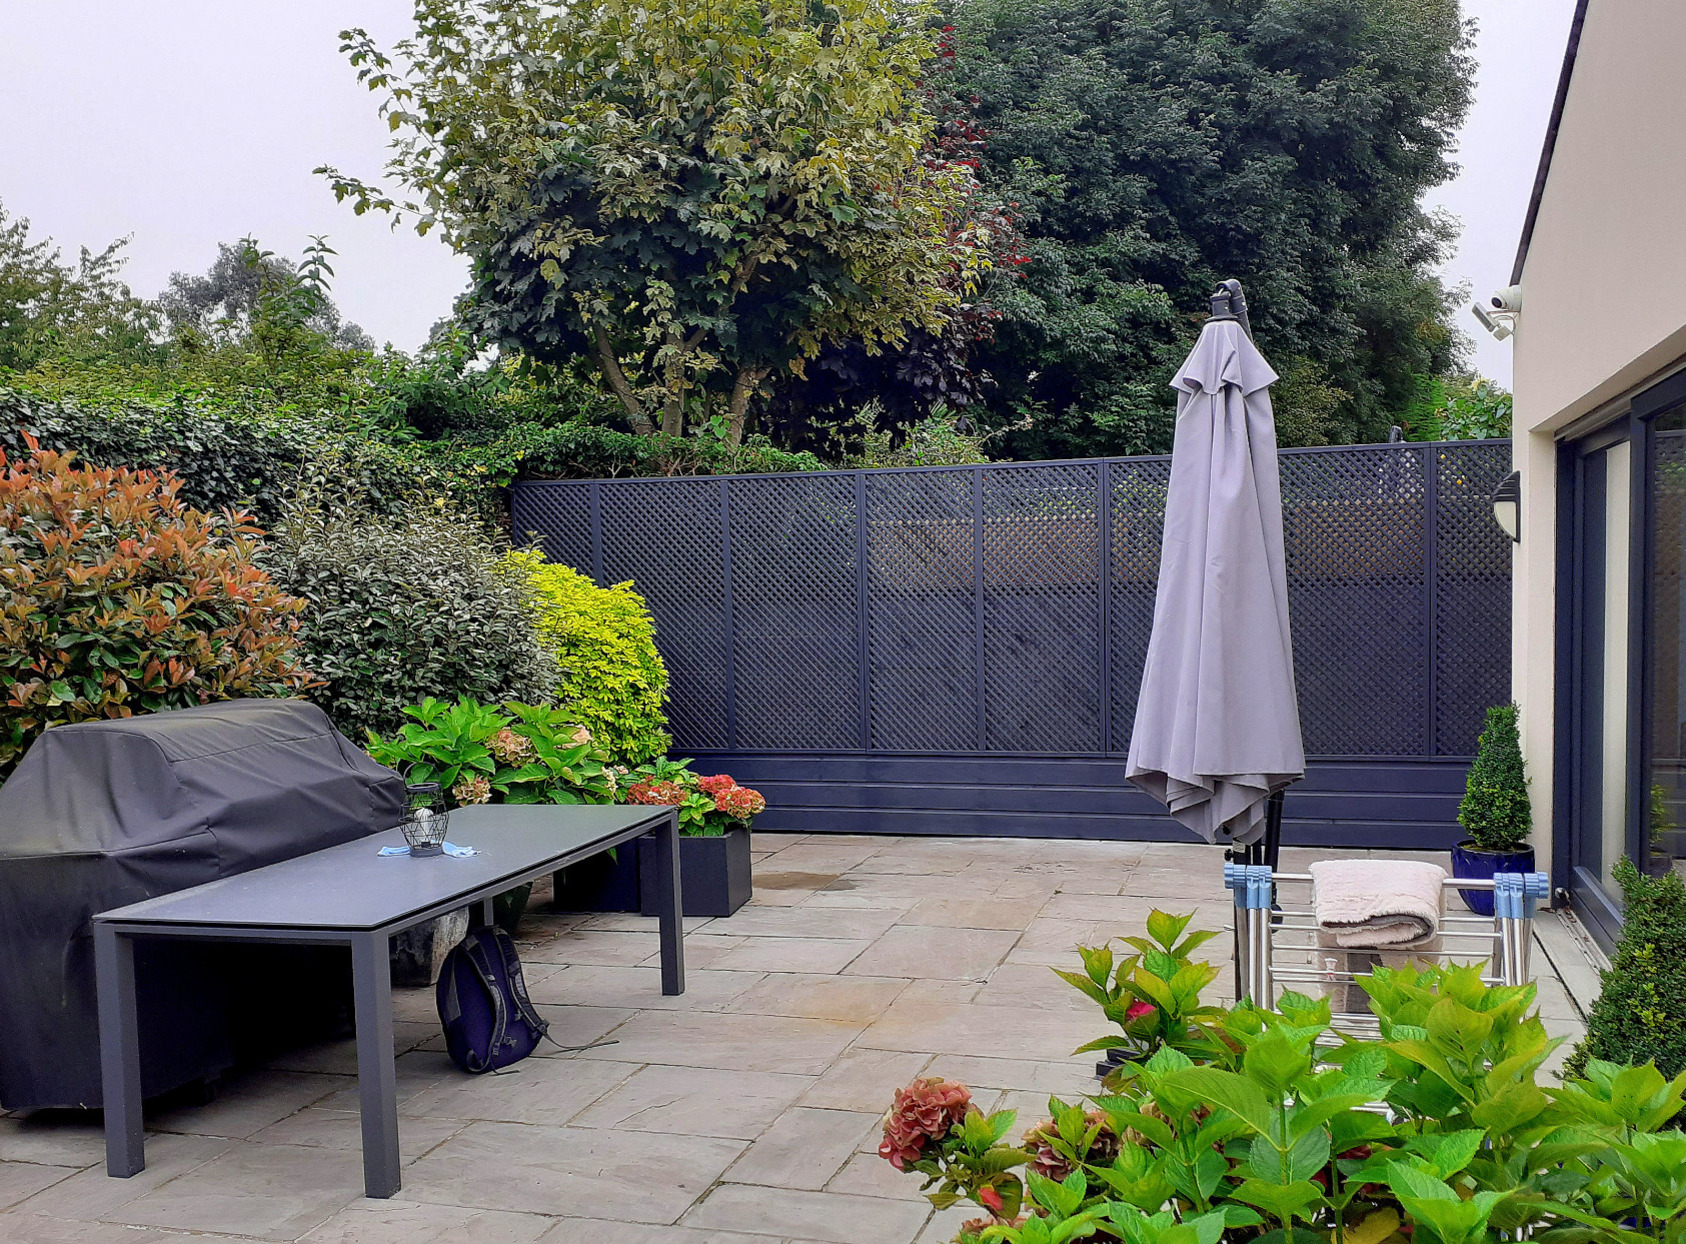 Custom made Garden Fencing - design & installation by Owen Chubb Garden Landscapes Limited